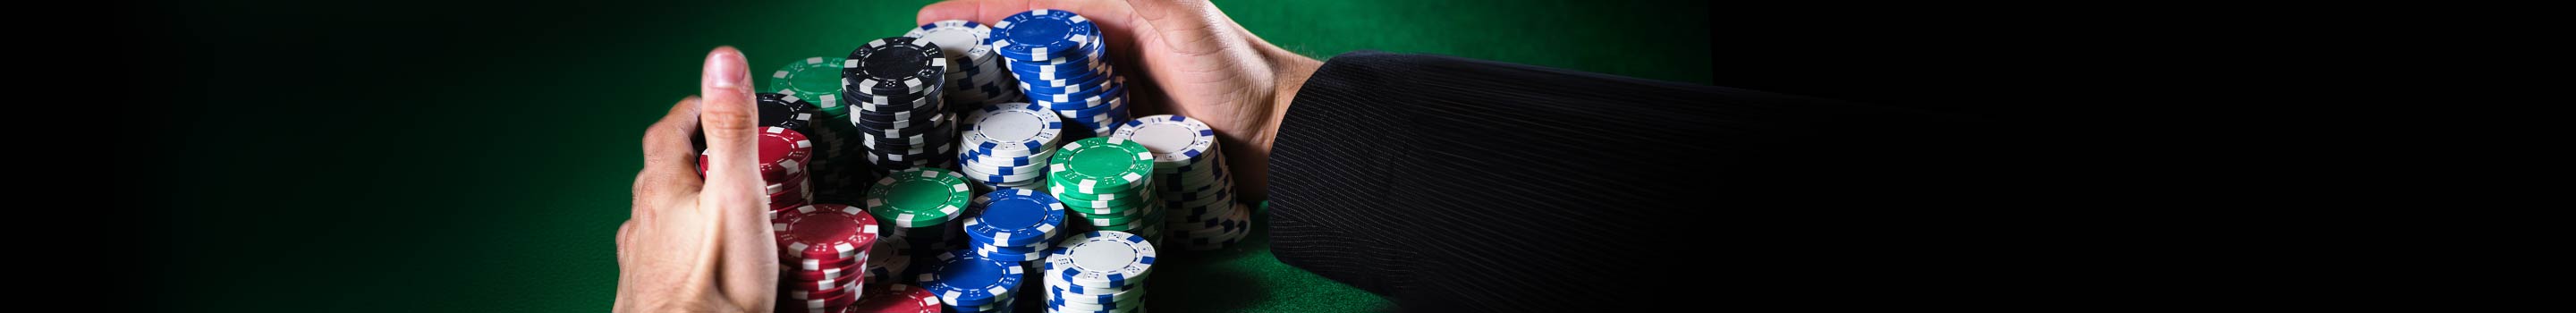 Poker bonuses and promos